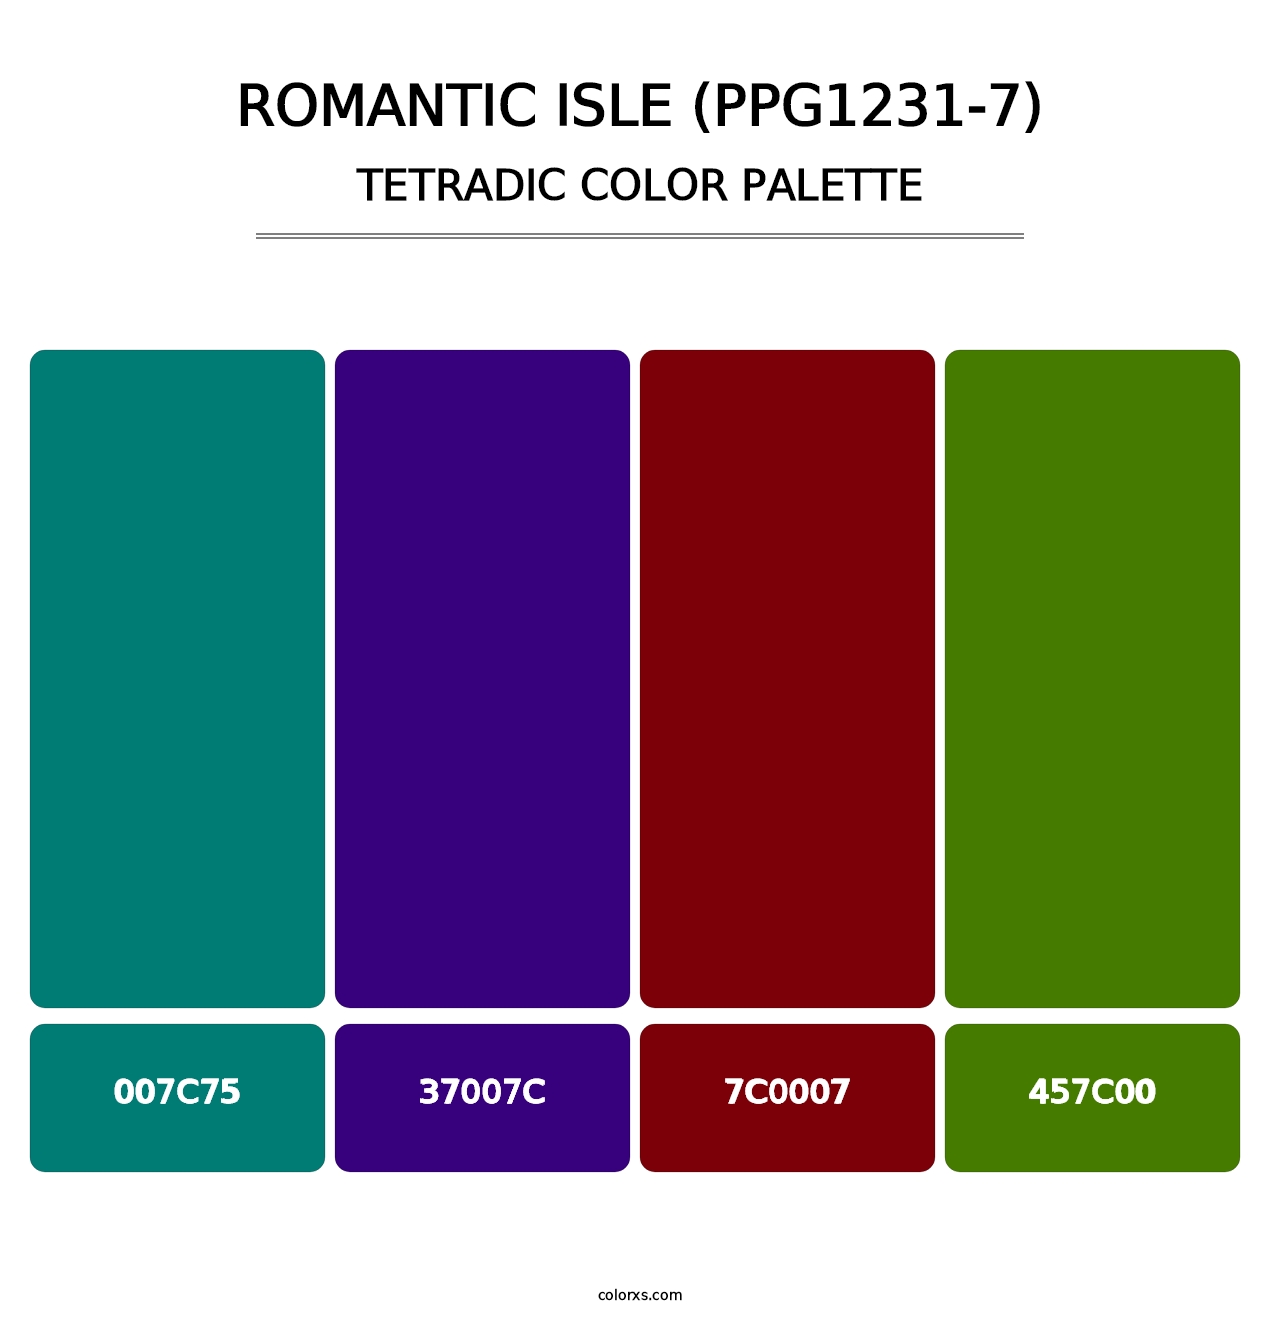 Romantic Isle (PPG1231-7) - Tetradic Color Palette